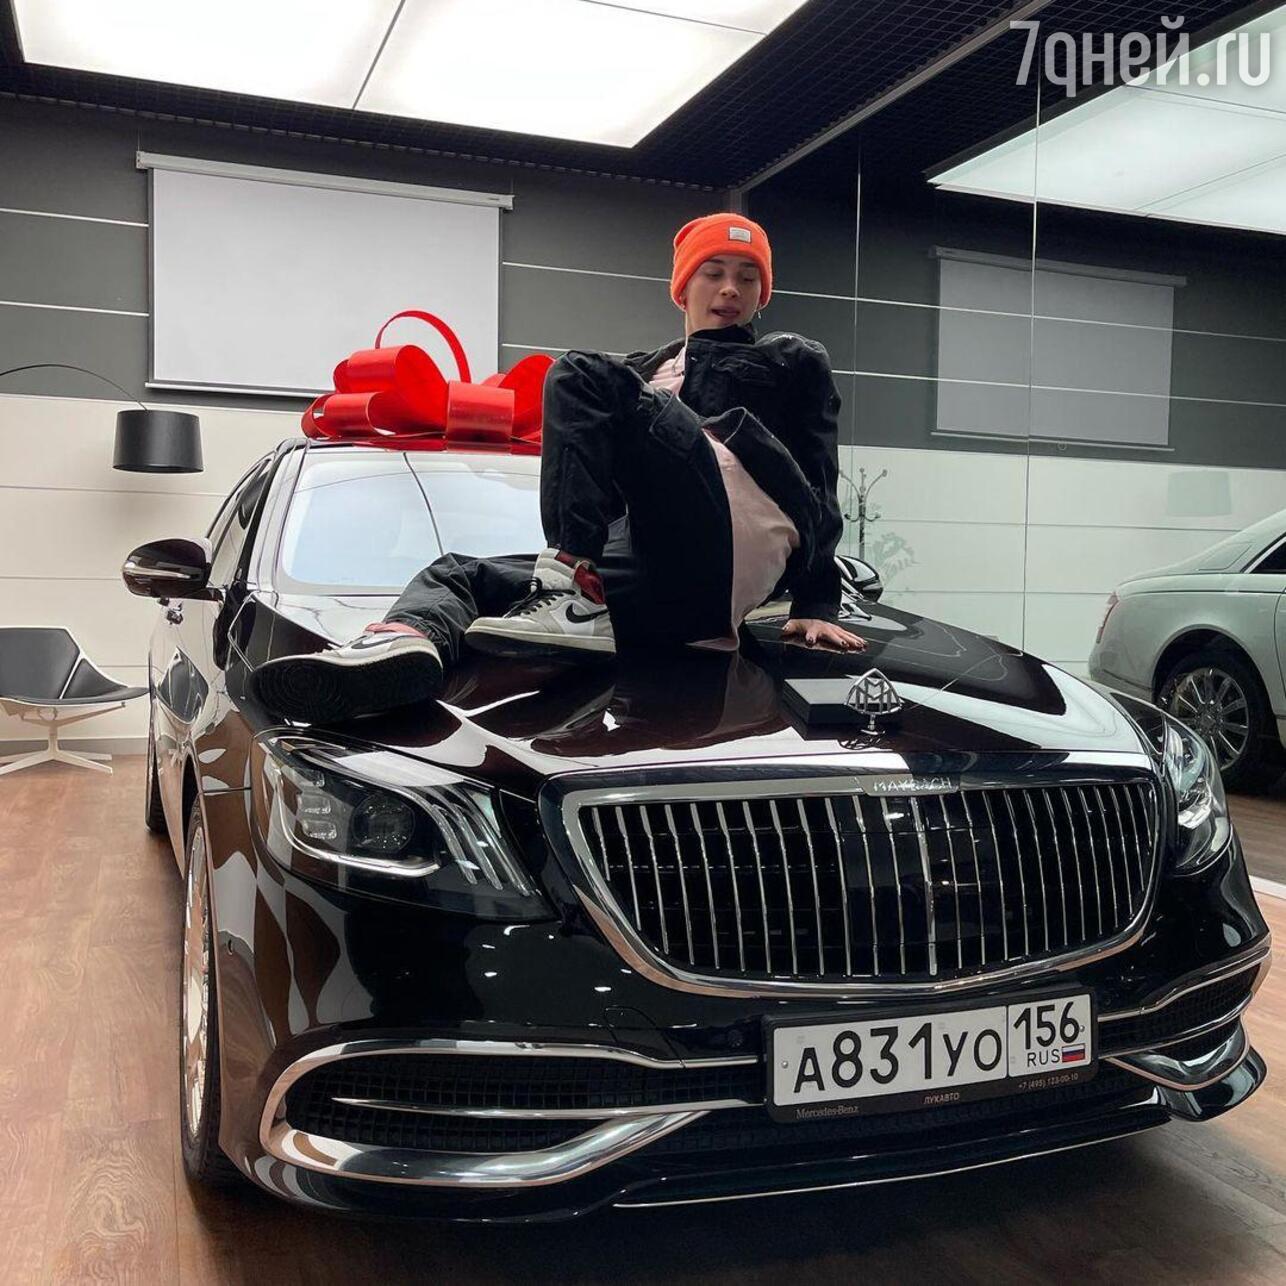 Автомобиль за миллион рублей